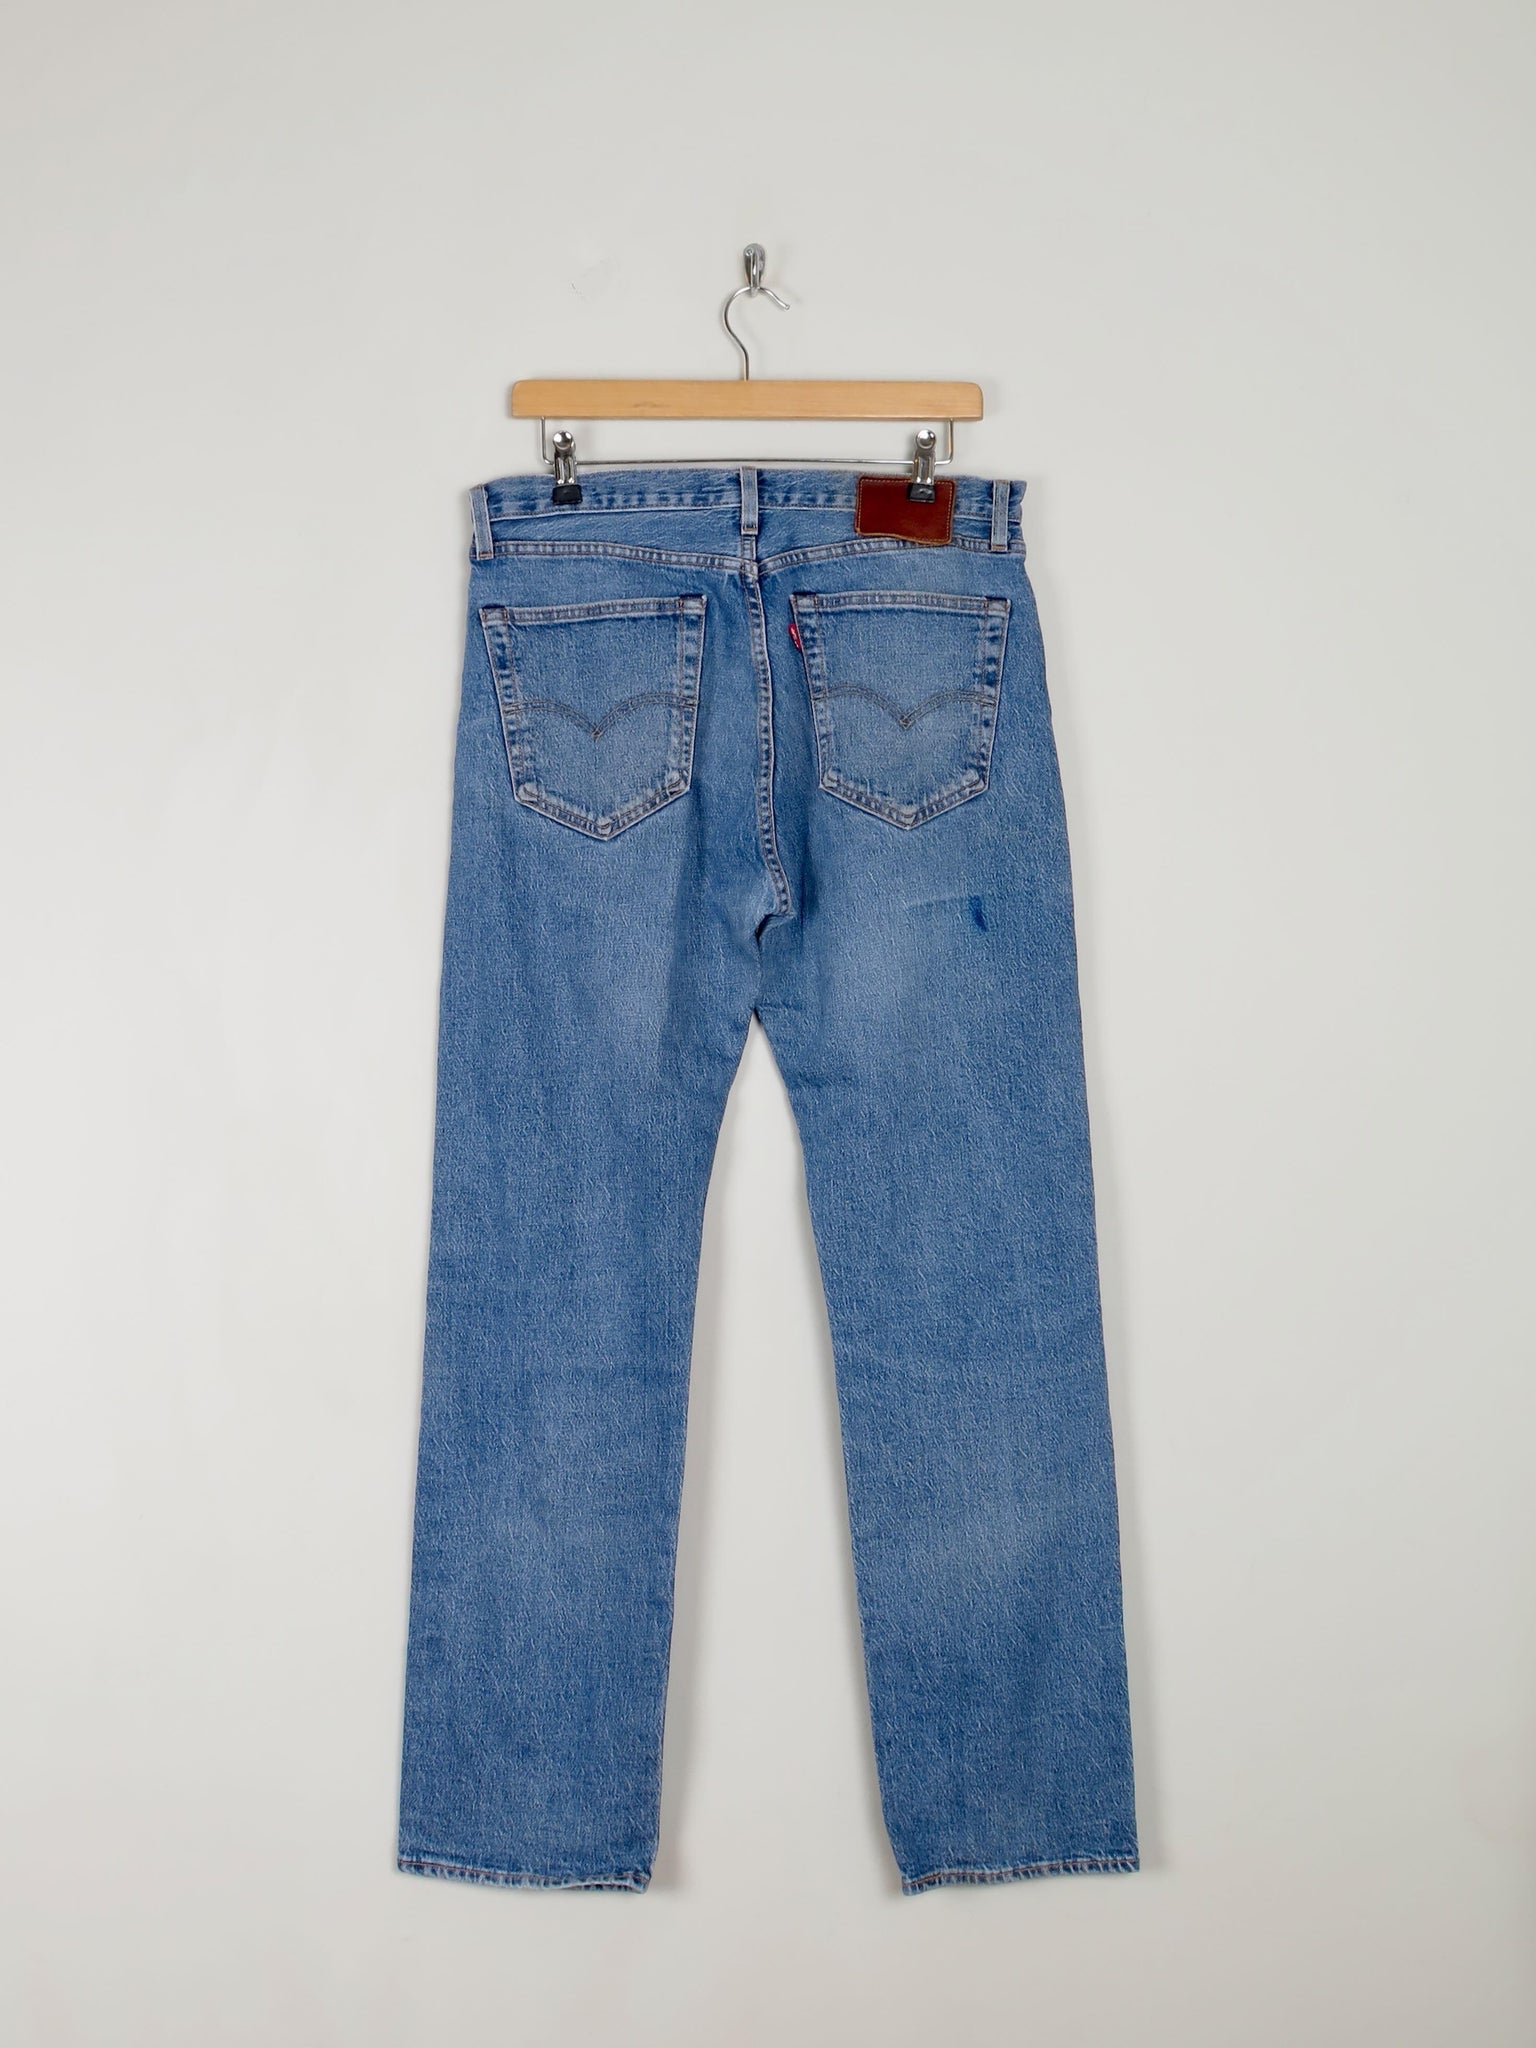 Men's Blue Denim Levi’s 501s Jeans 32/32 - The Harlequin